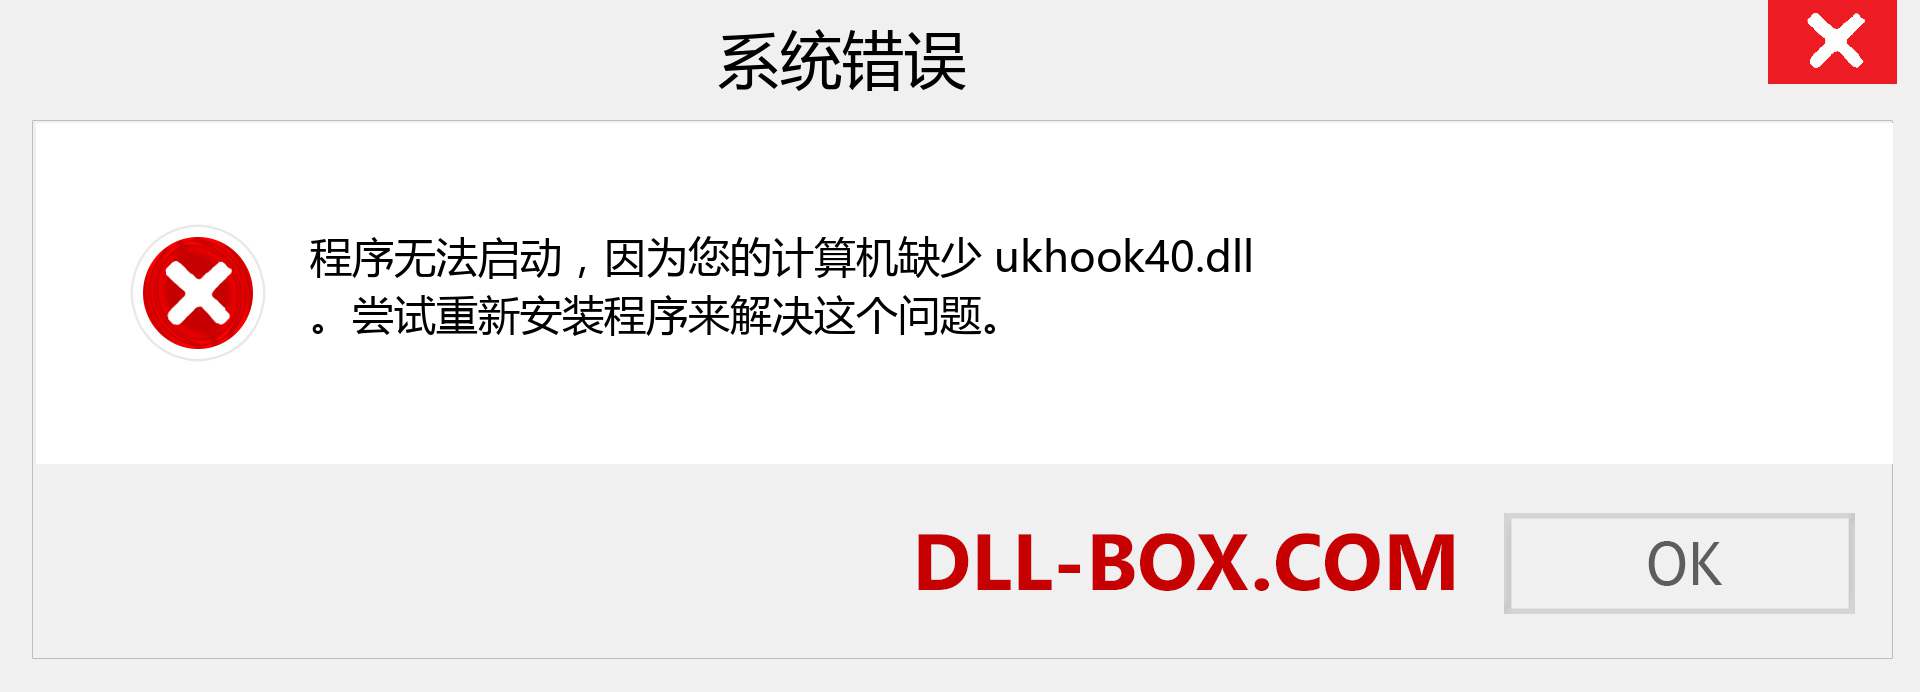 ukhook40.dll 文件丢失？。 适用于 Windows 7、8、10 的下载 - 修复 Windows、照片、图像上的 ukhook40 dll 丢失错误